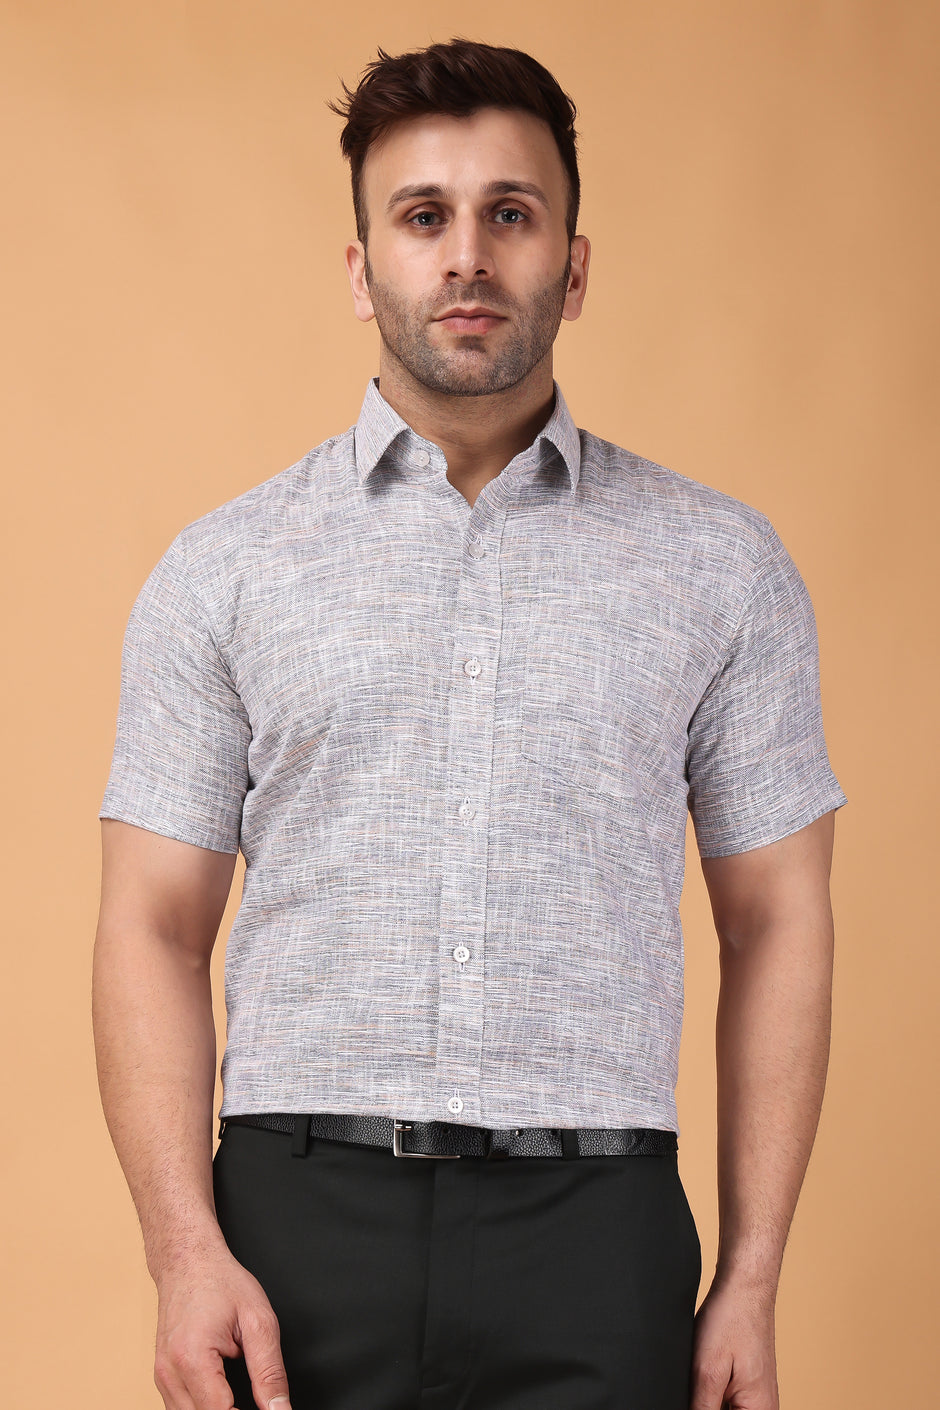 Buy Mens Shirts Online & Plus Size Shirts For Men - Apella